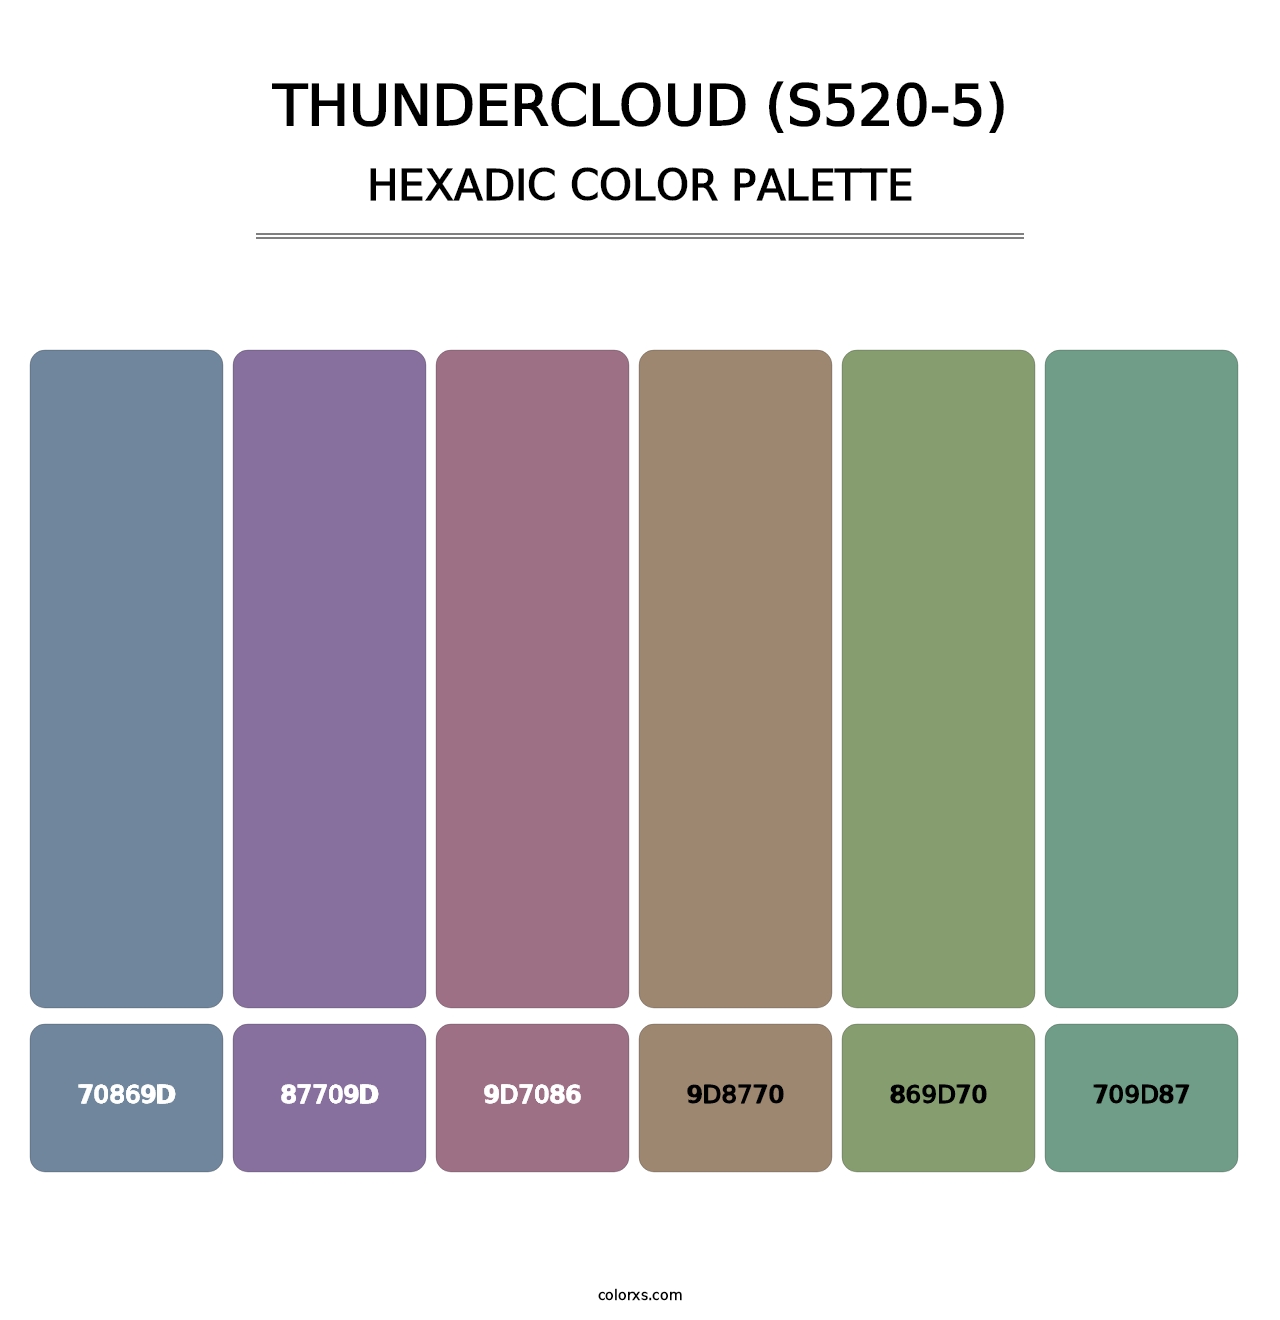 Thundercloud (S520-5) - Hexadic Color Palette